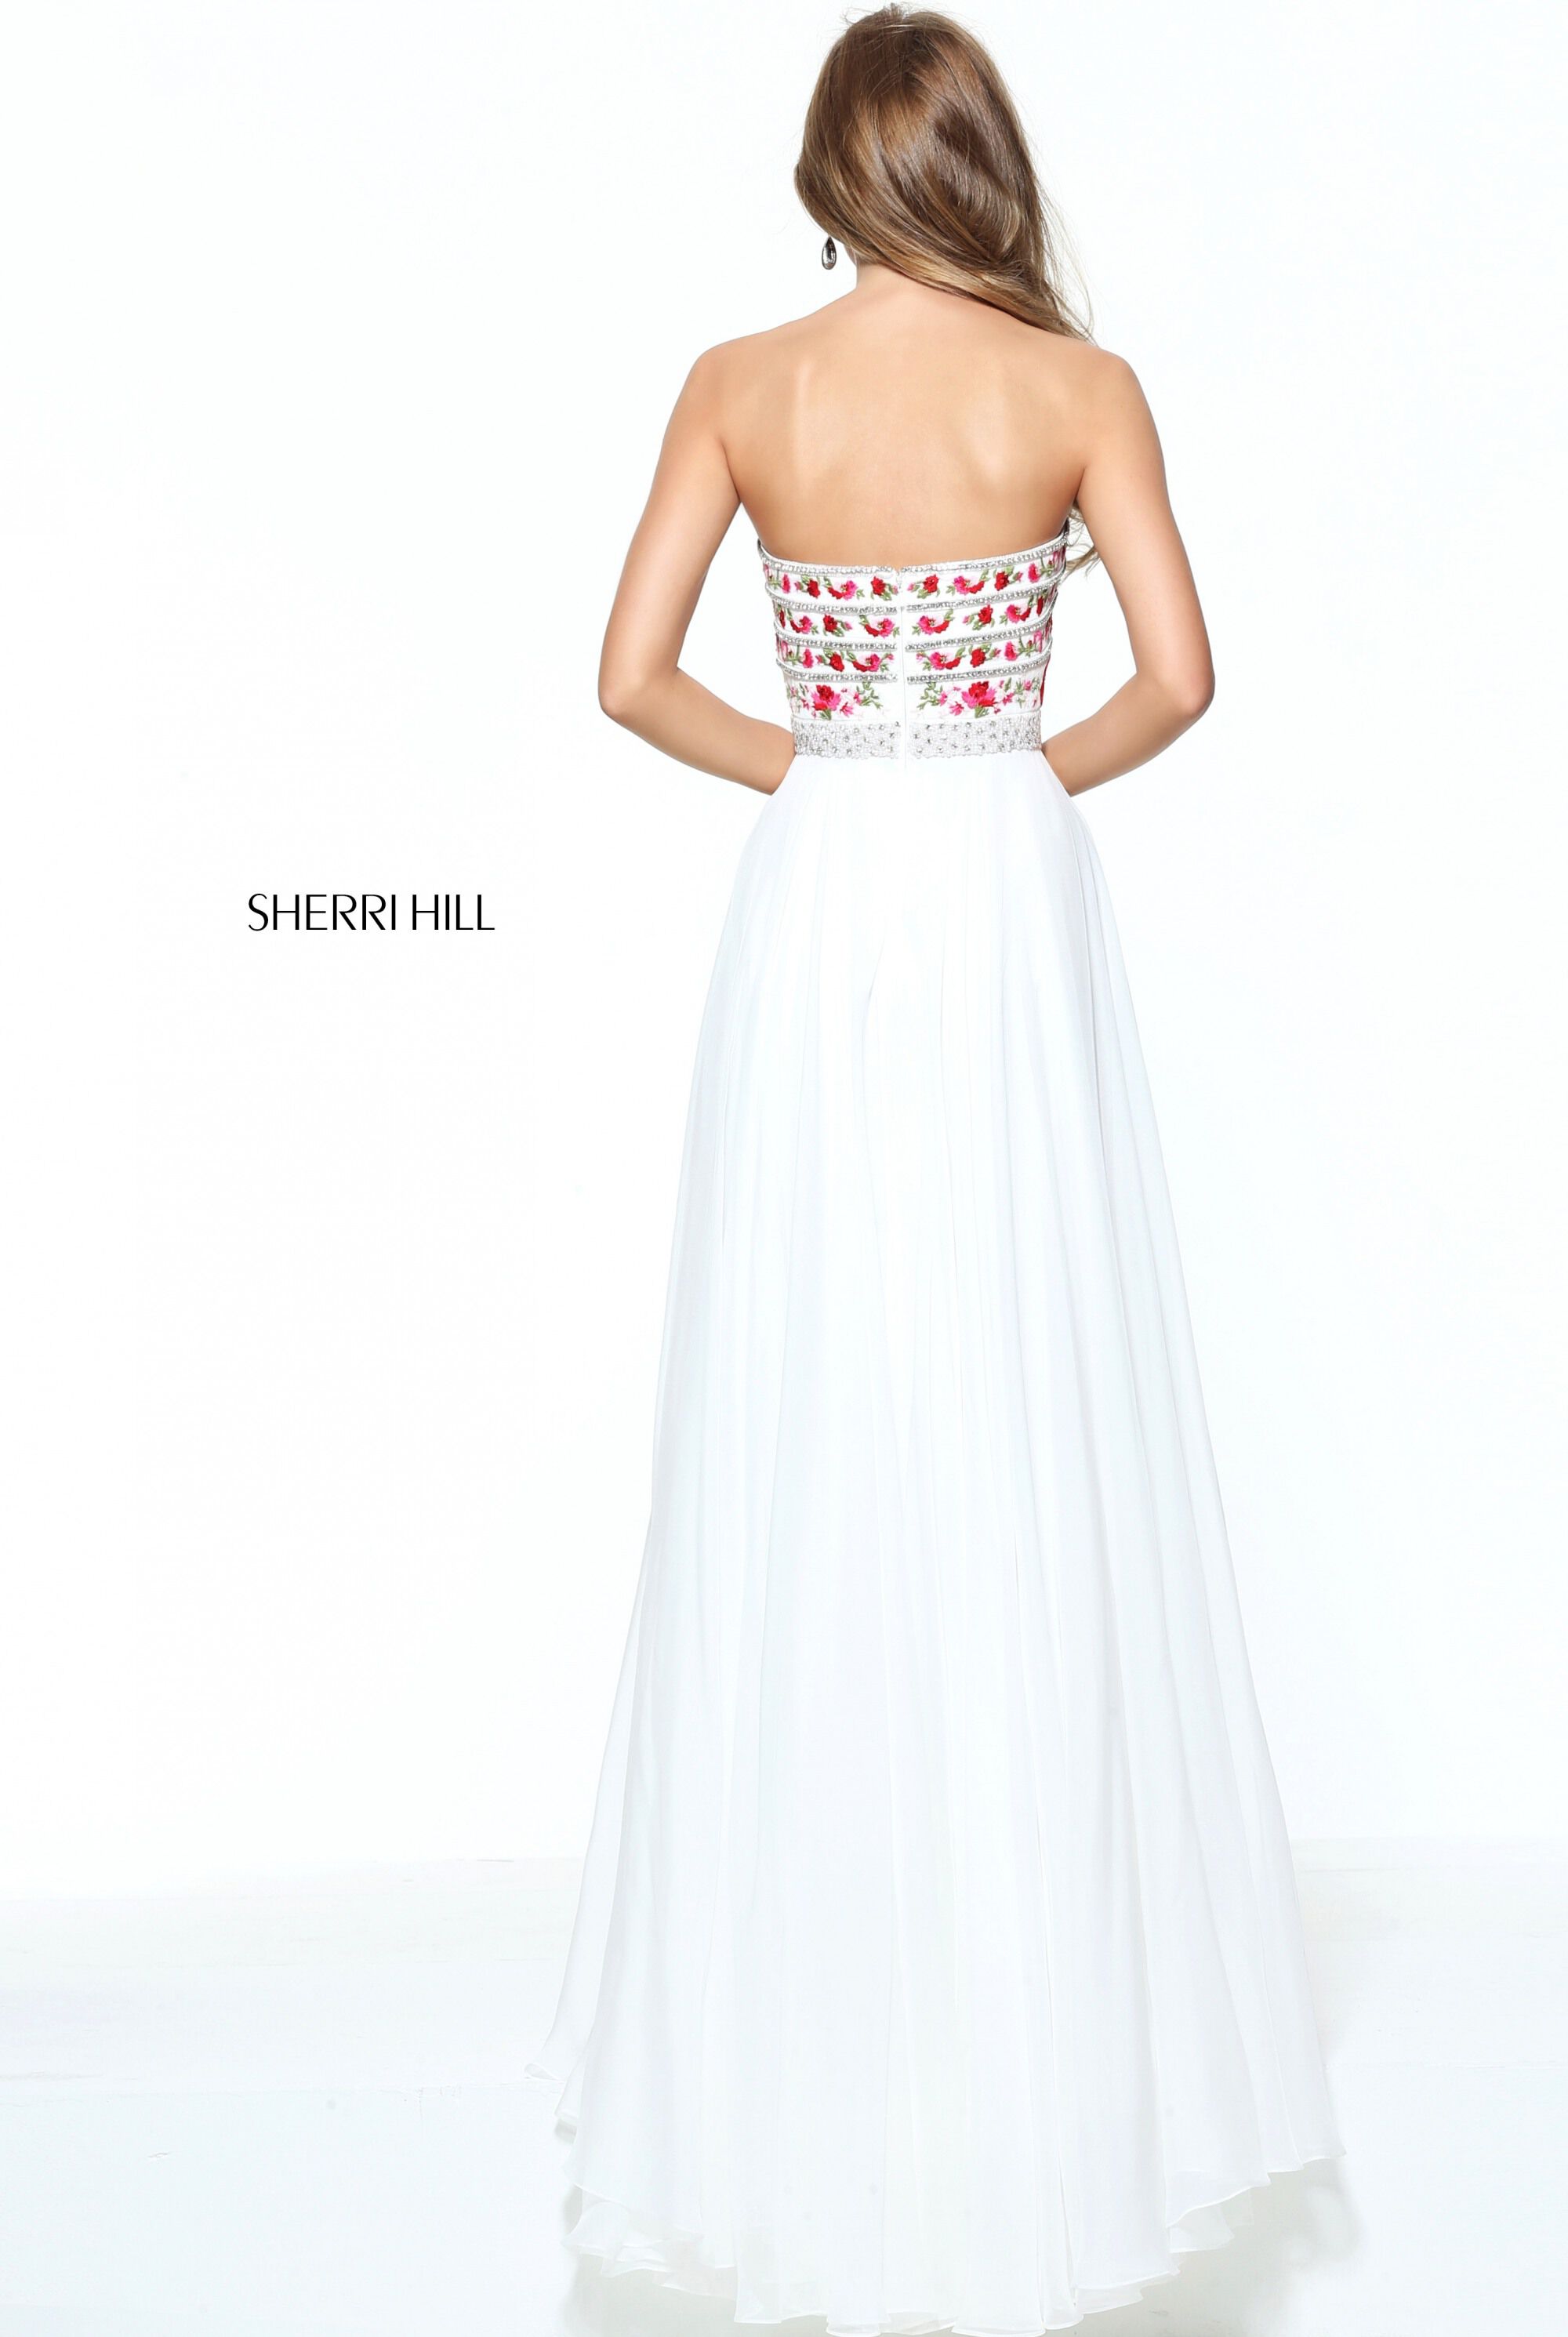 Buy dress style № 50984 designed by SherriHill